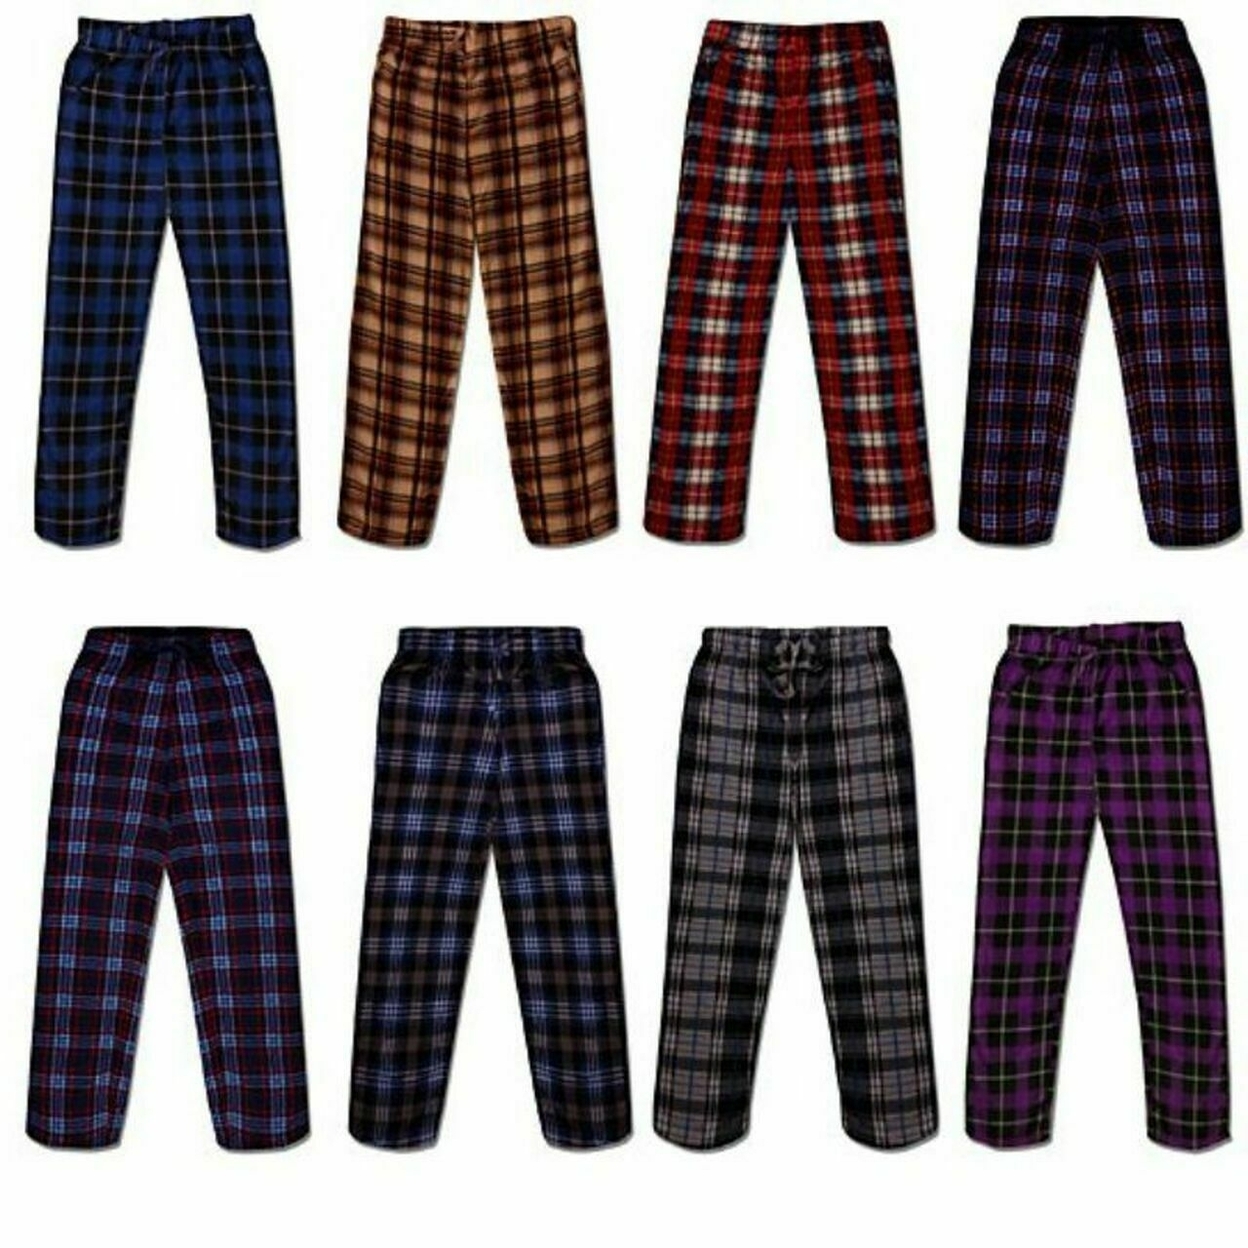 2-Pack: Men's Ultra Soft Cozy Flannel Fleece Plaid Pajama Sleep Bottom Lounge Pants - Red & Grey, Small